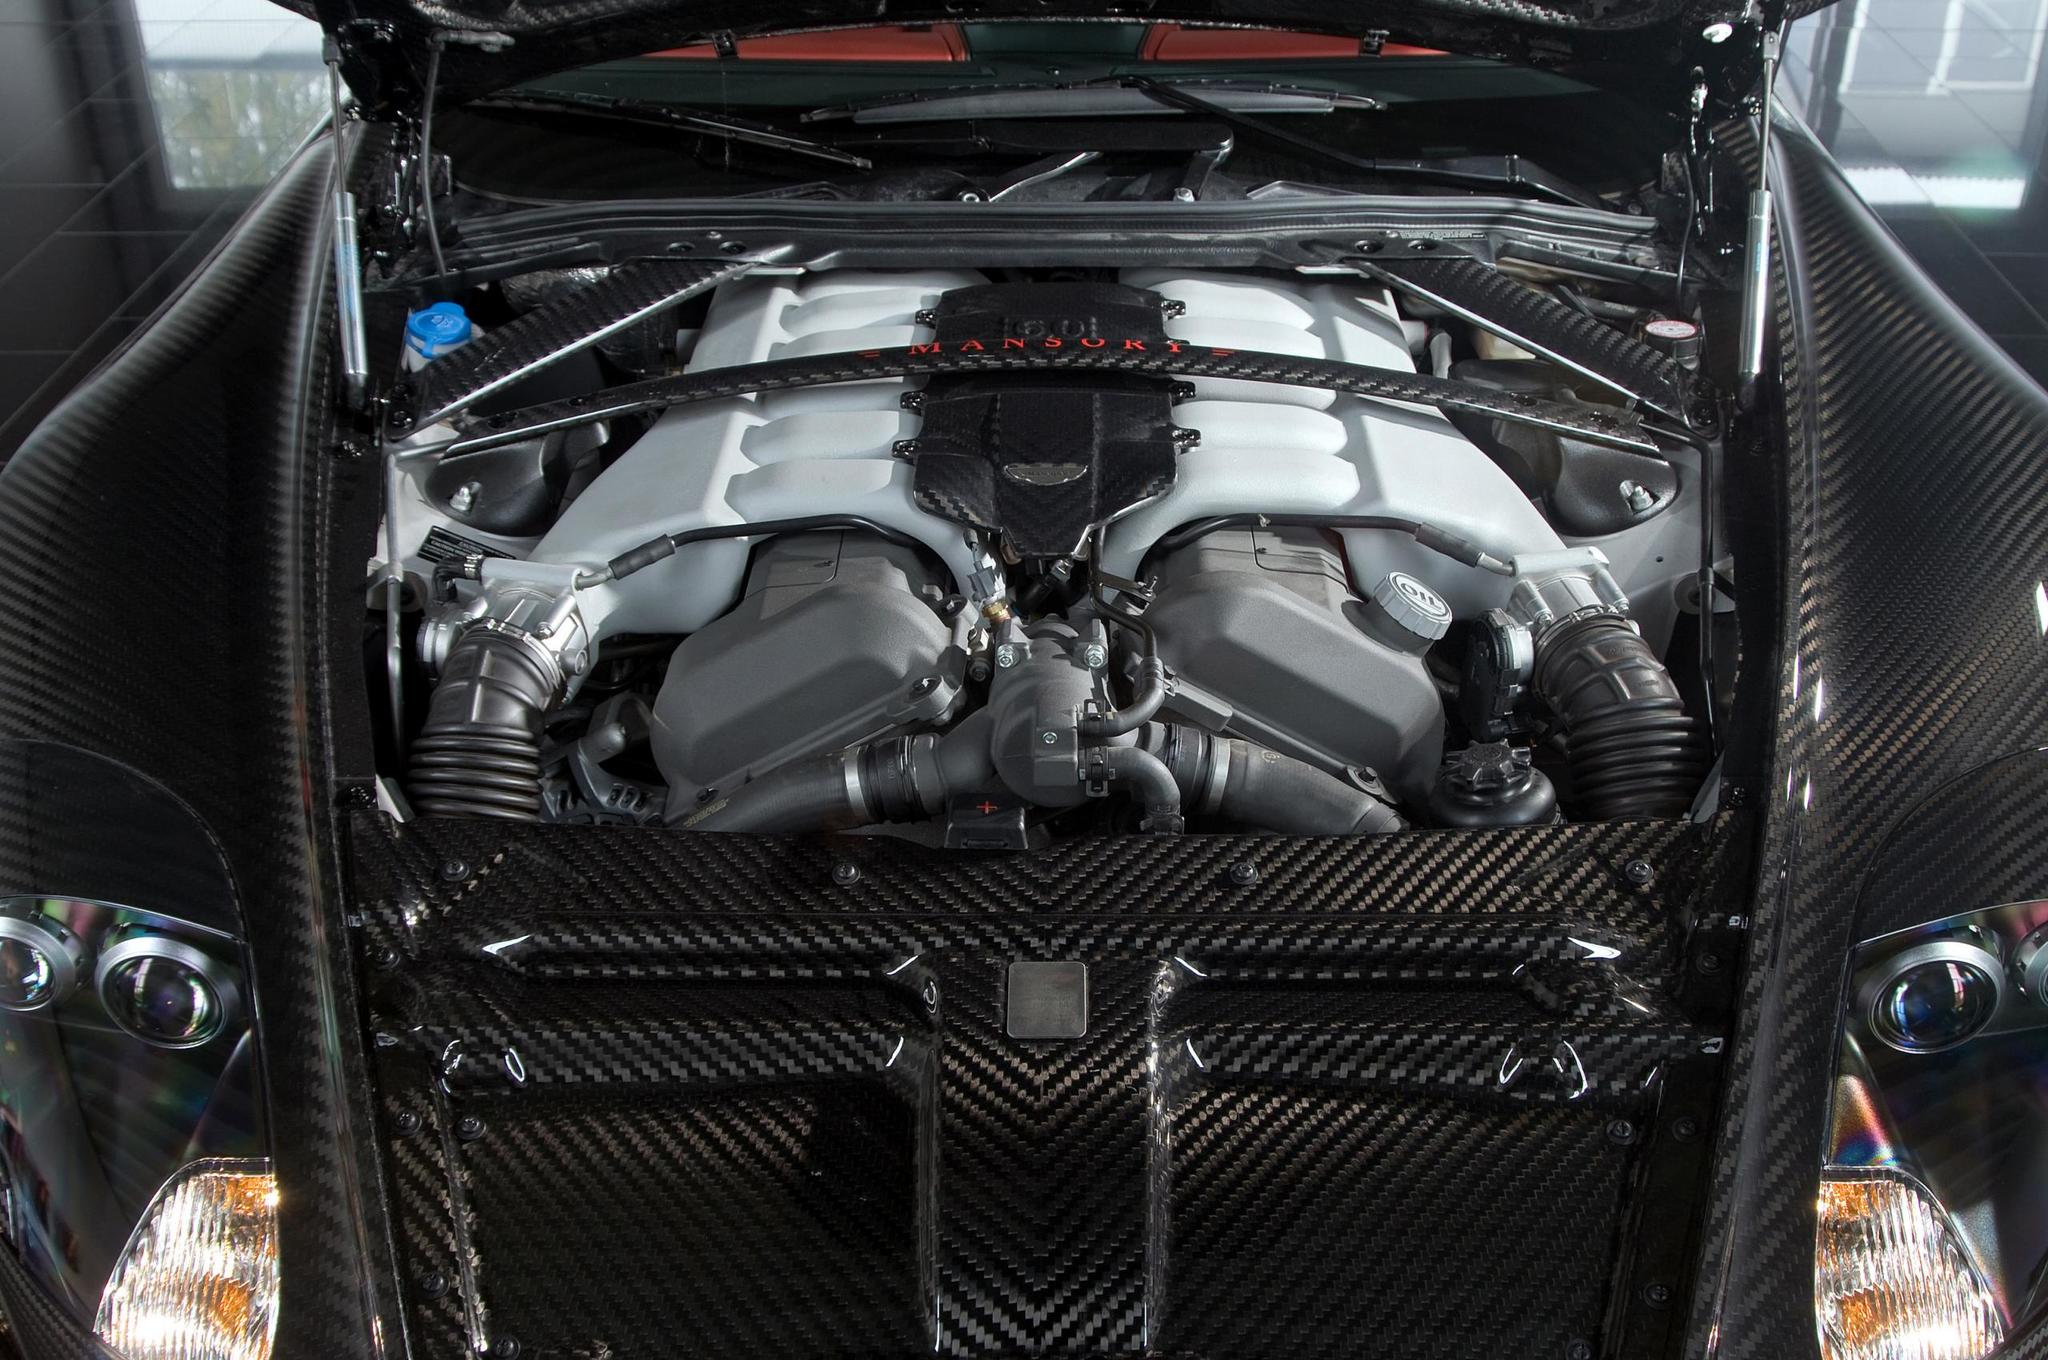 Mansory body kit for Aston Martin DBS/DB9 carbon